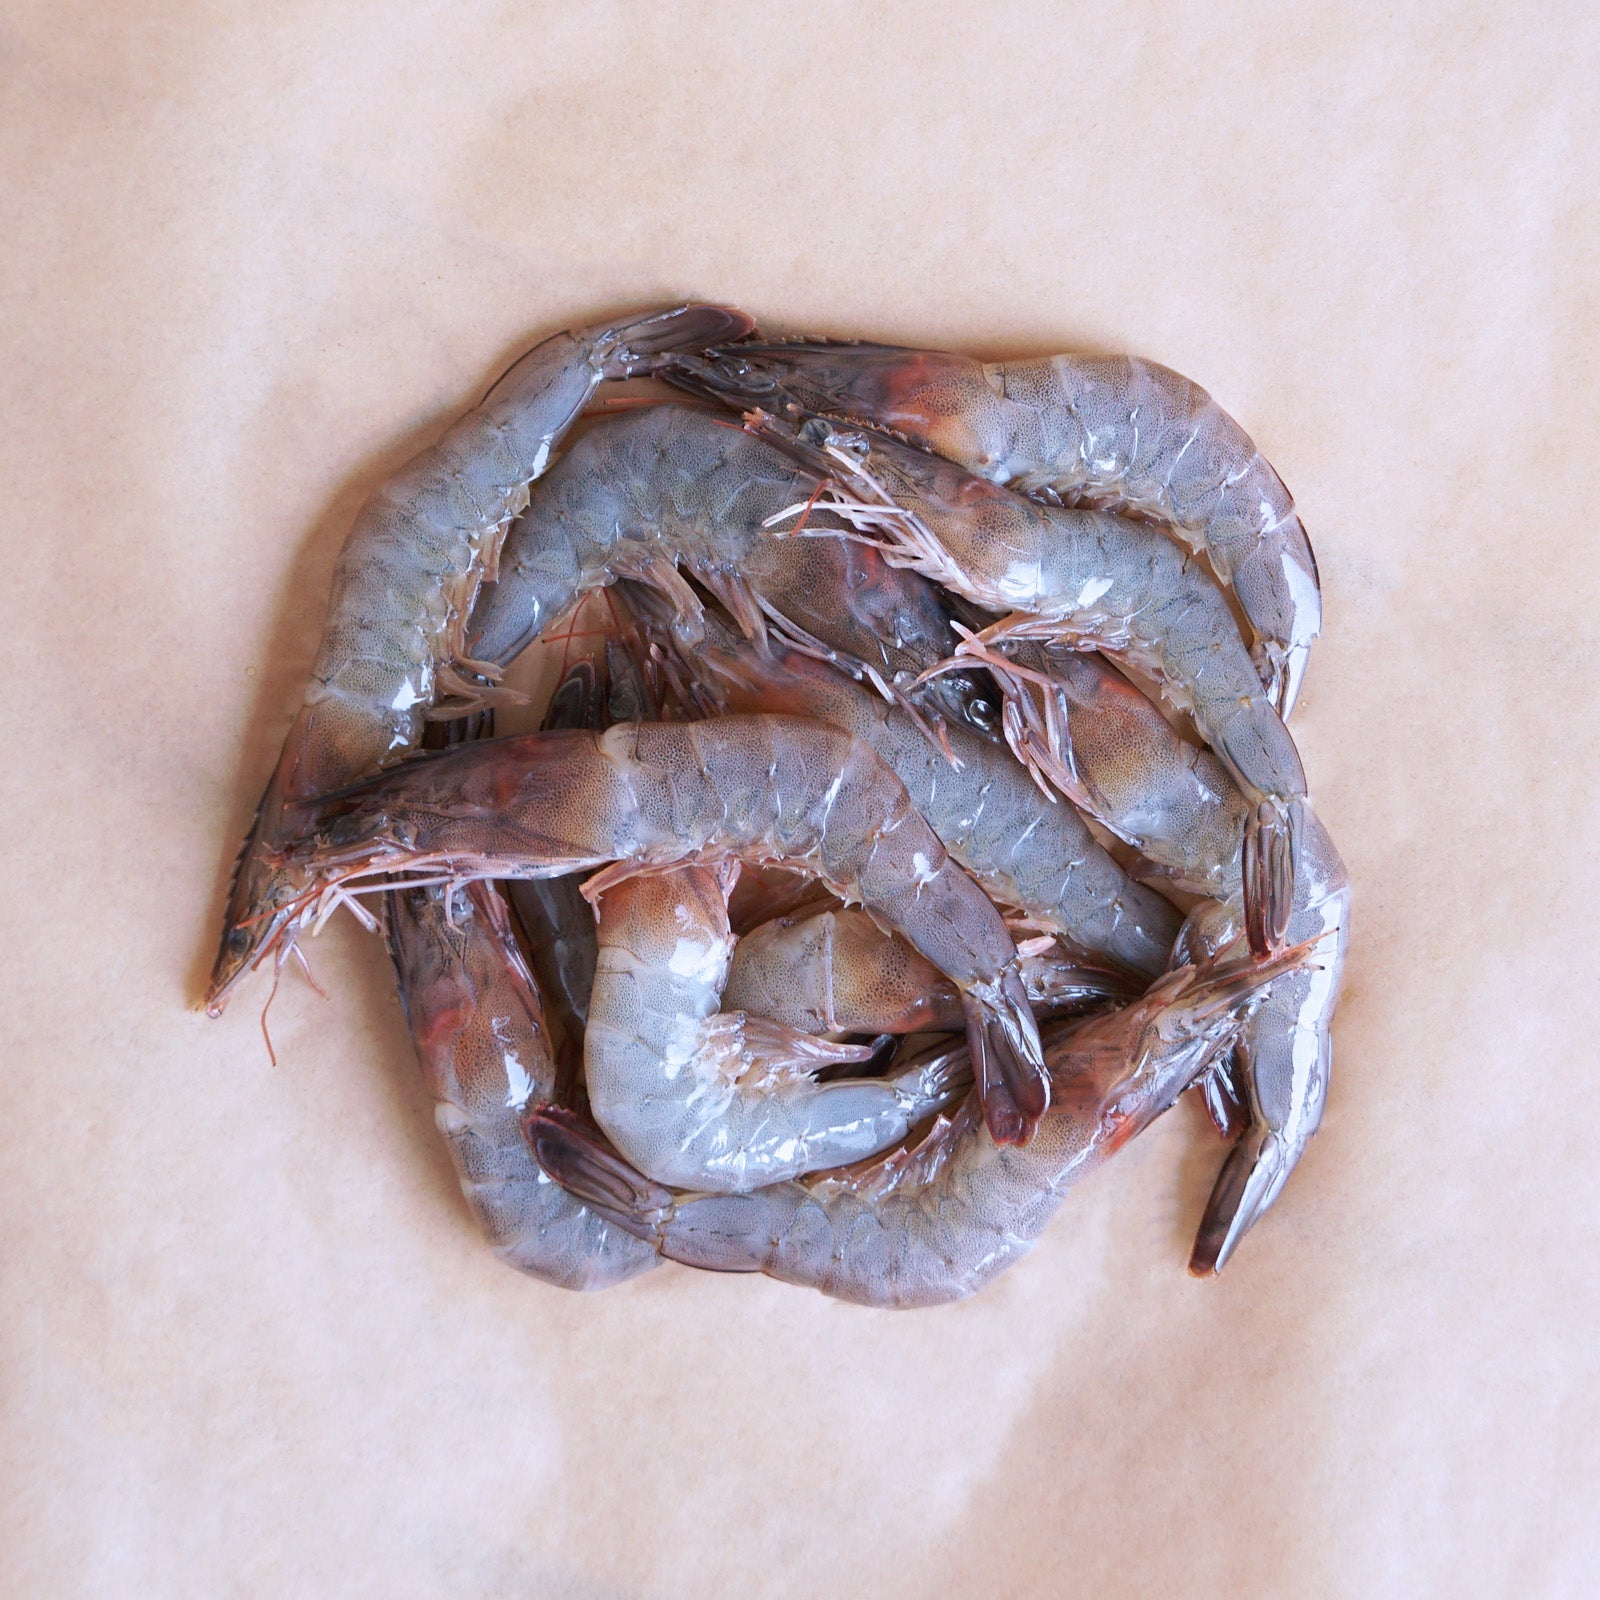 All-Natural Sashimi Grade Shrimp - Preservative and Nasty Free from Japan B-Grade (160g) - Horizon Farms